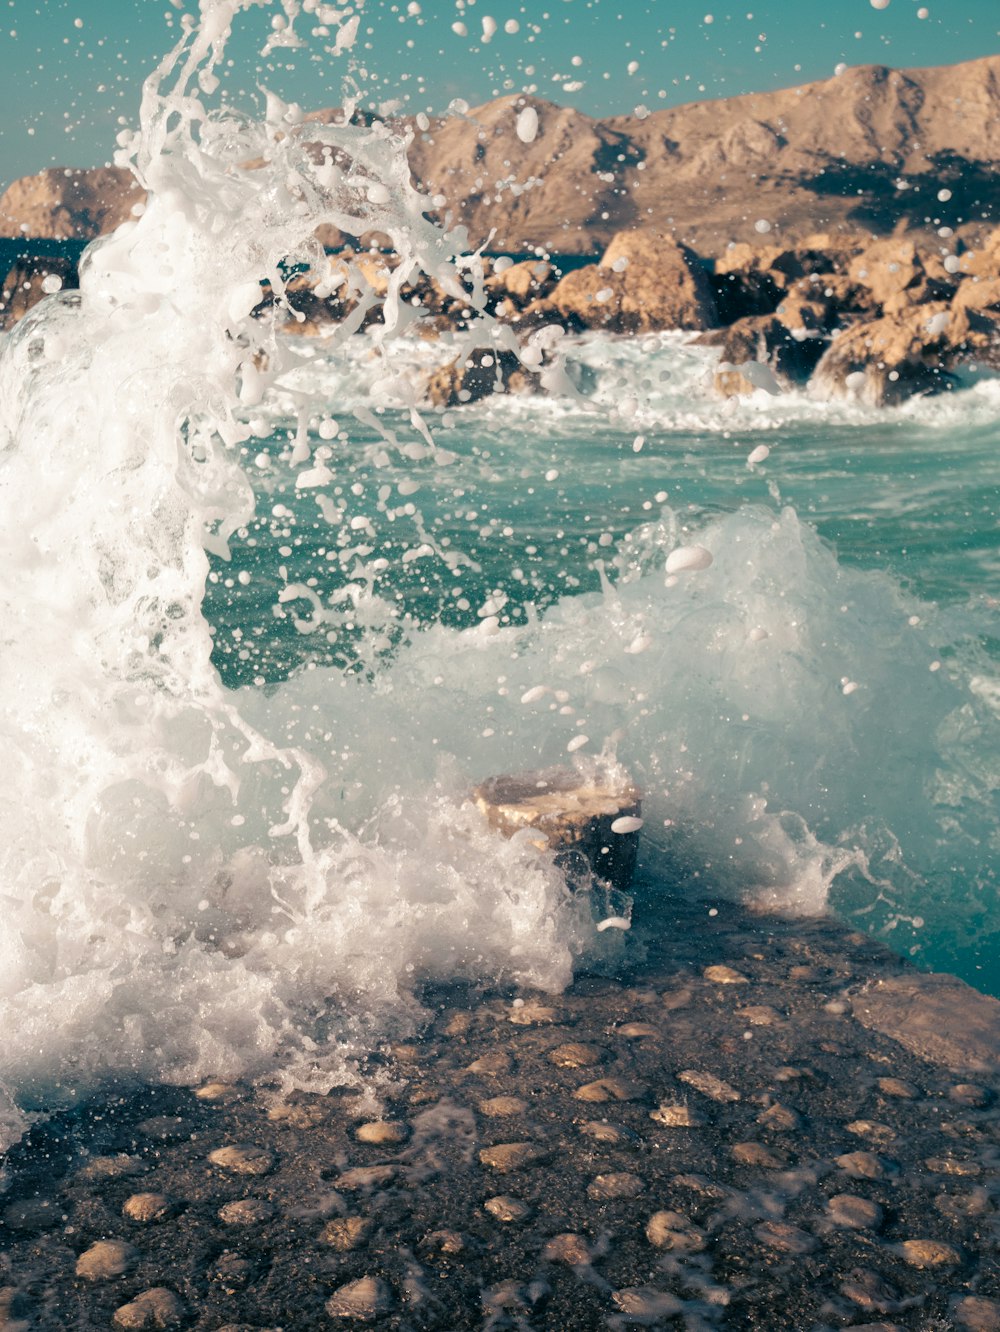 a wave crashing against a rock